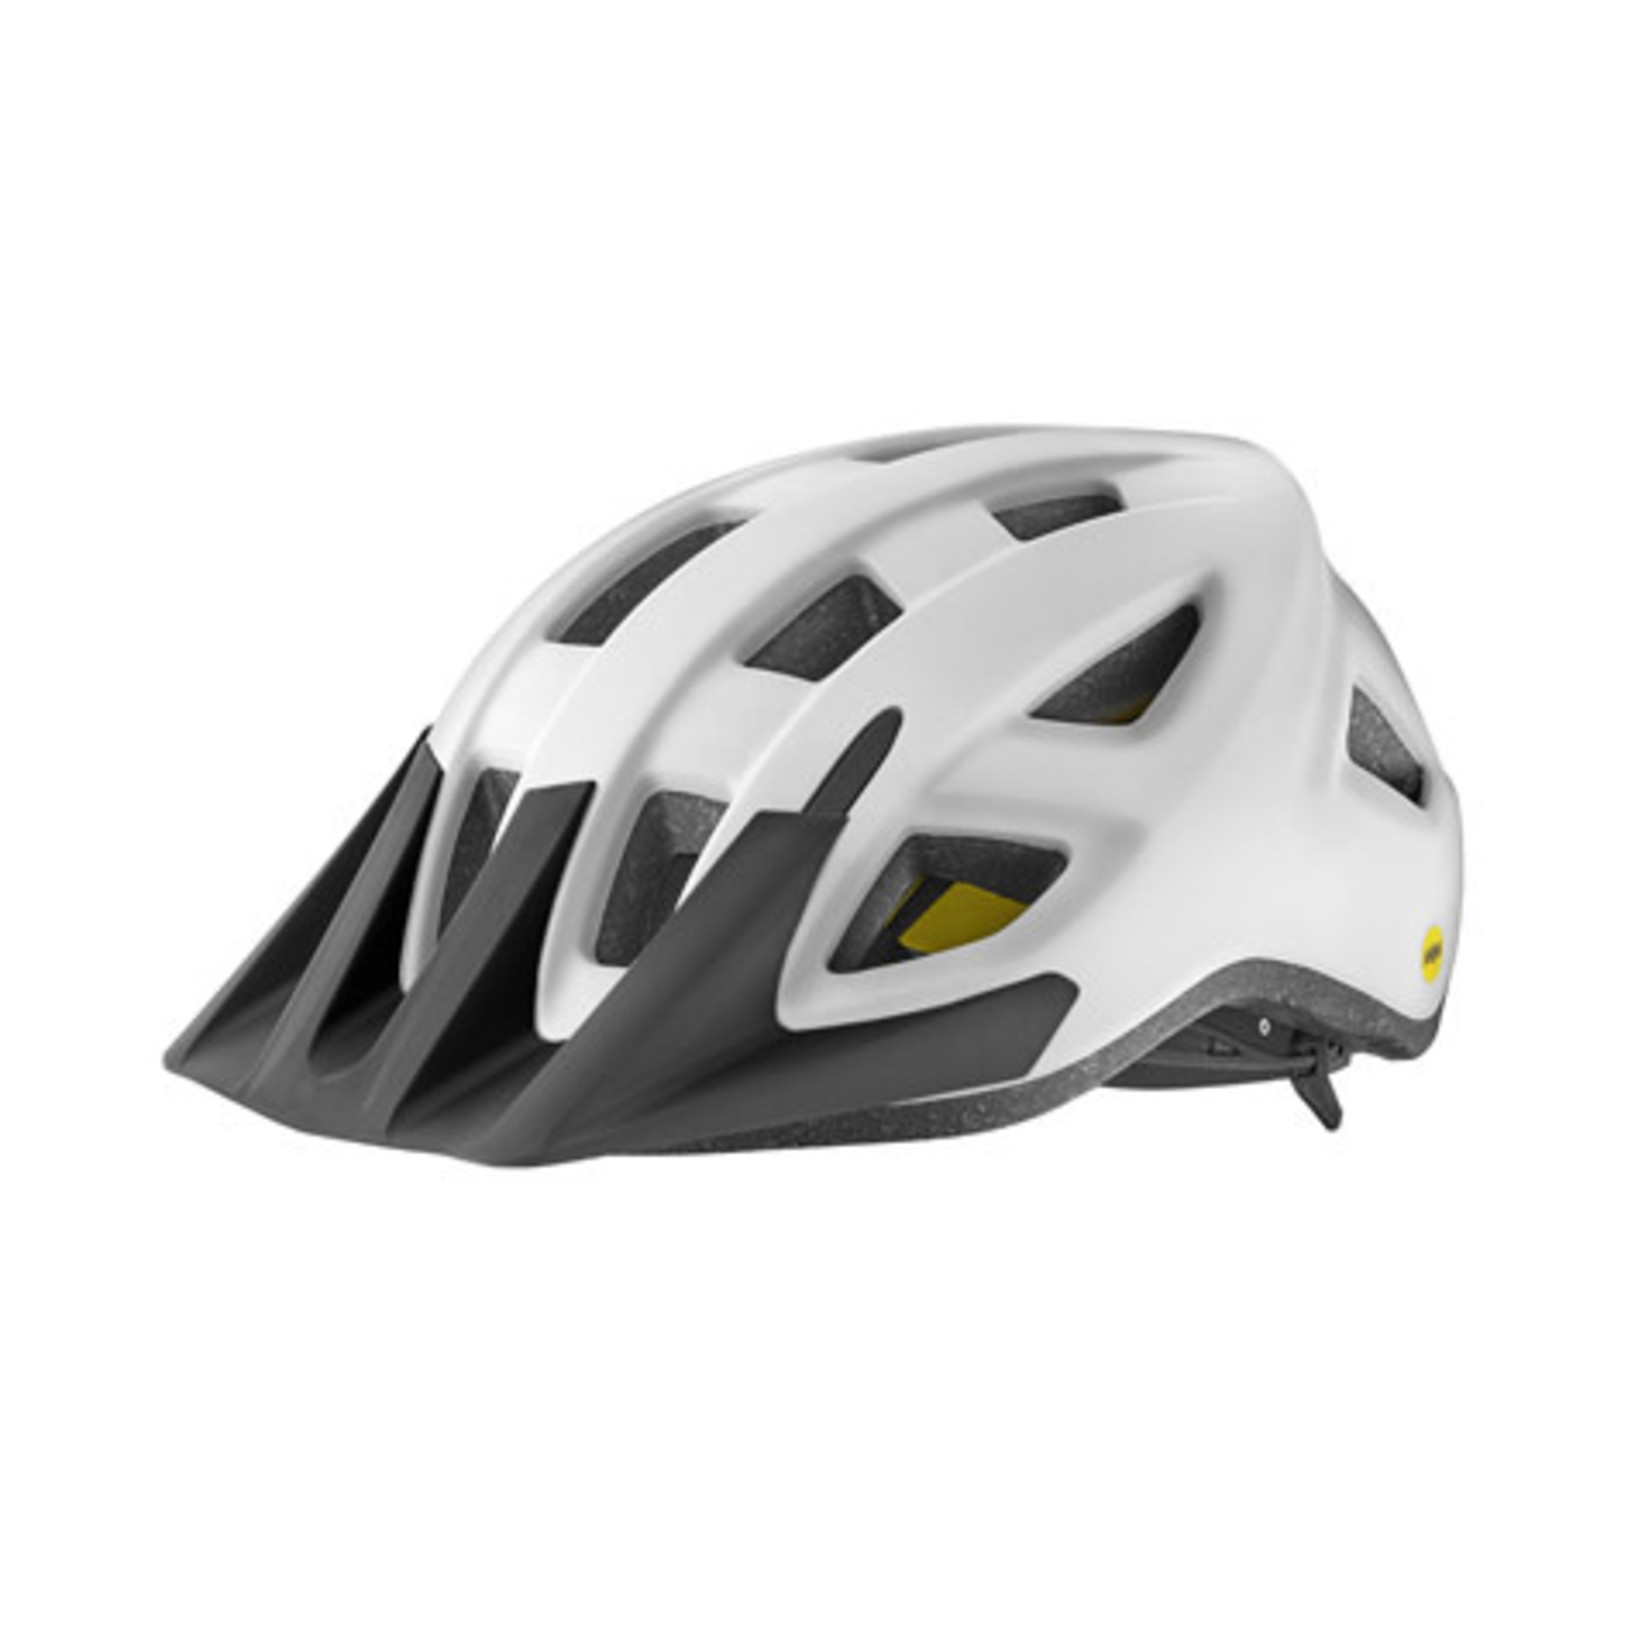 Giant PATH MIPS Helmet